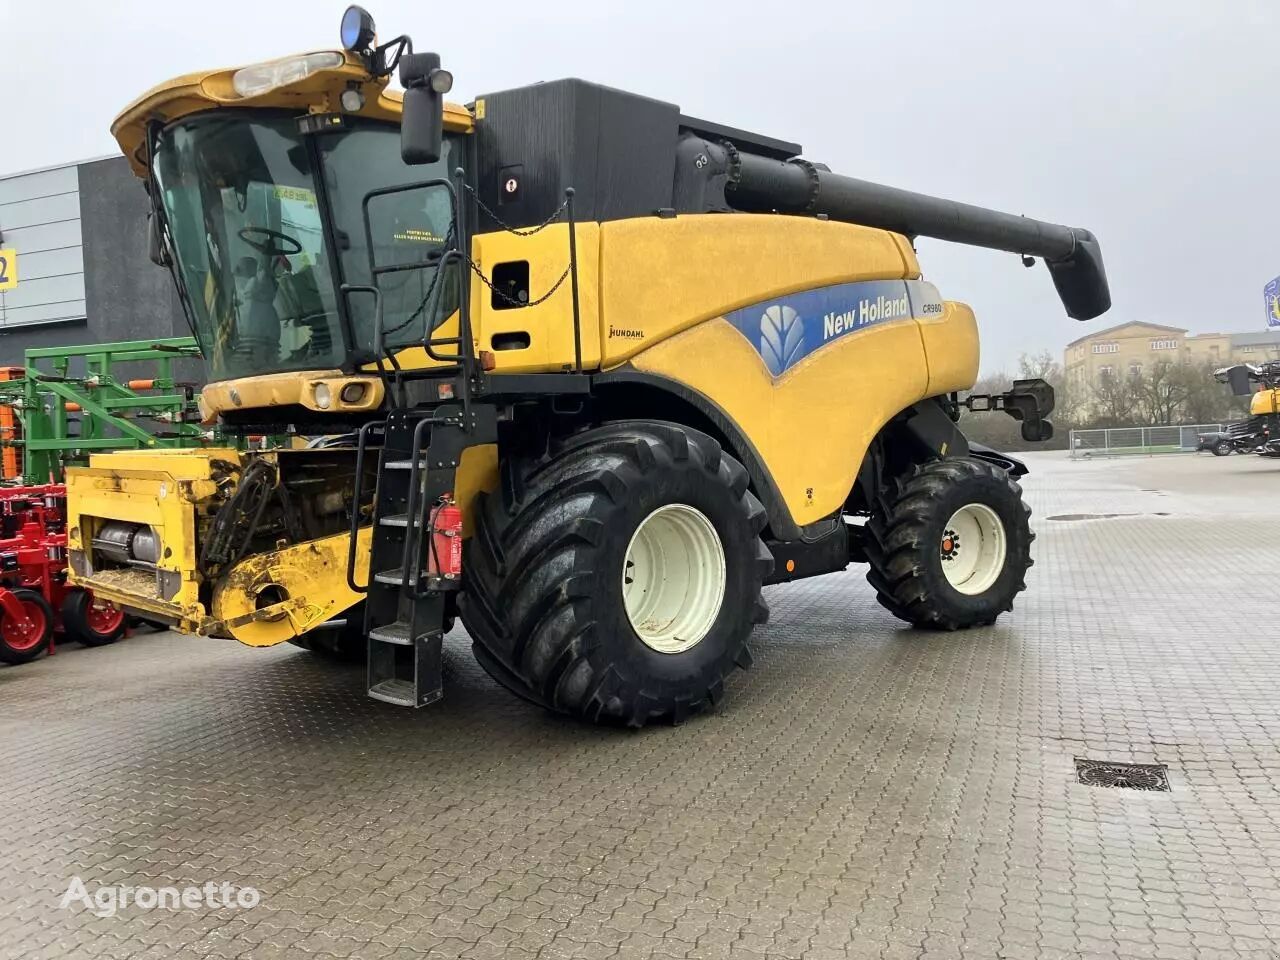 New Holland CX980 grain harvester